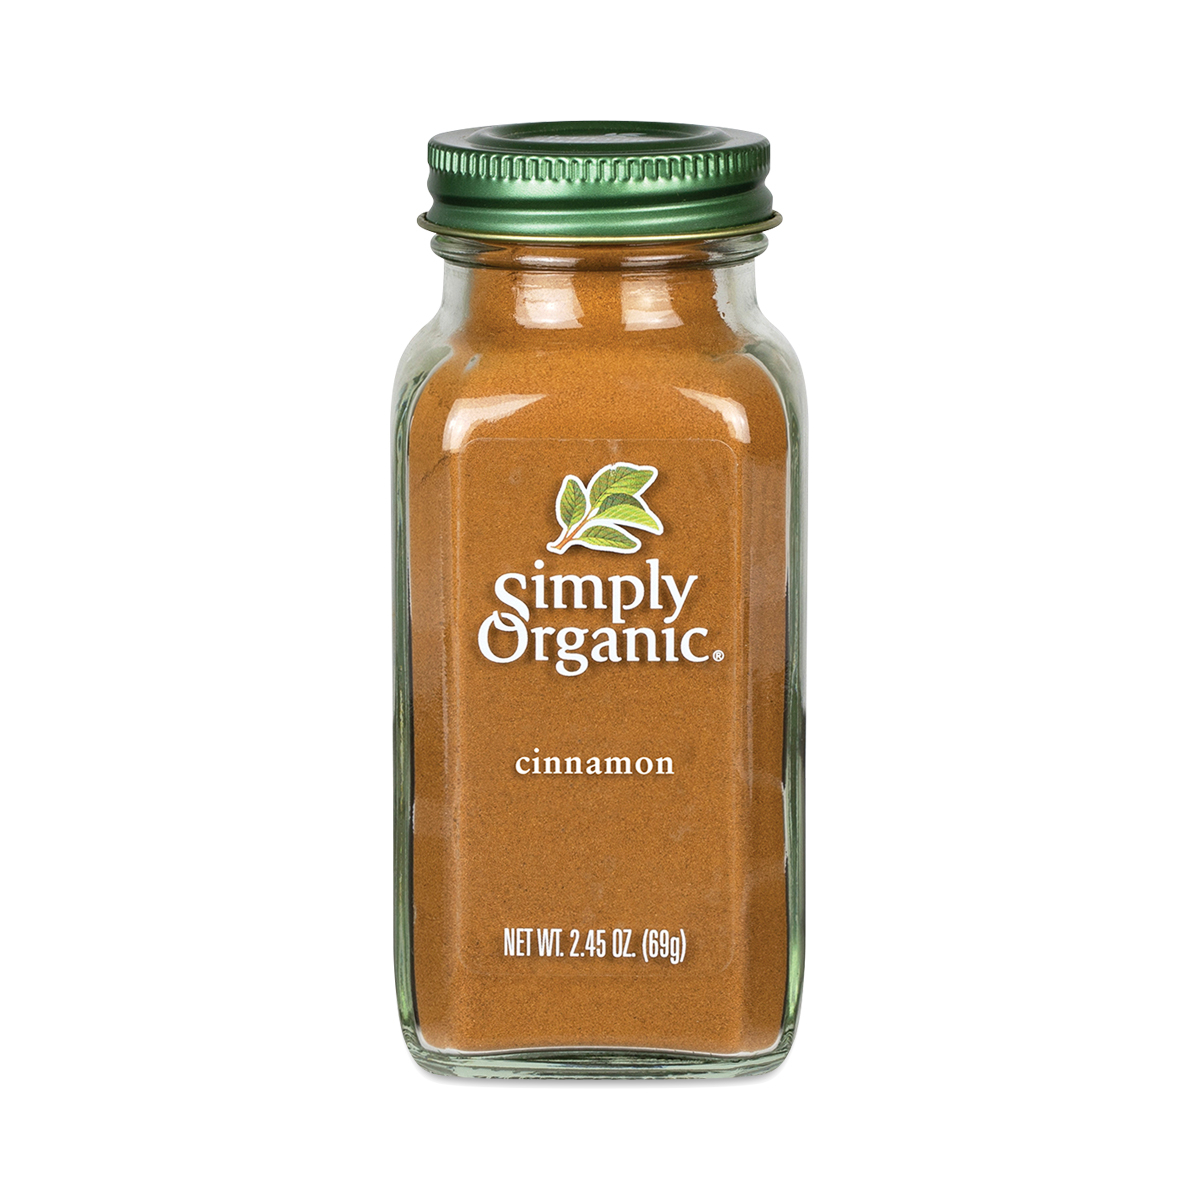 Simply Organic Ground Cinnamon 2.45 oz container